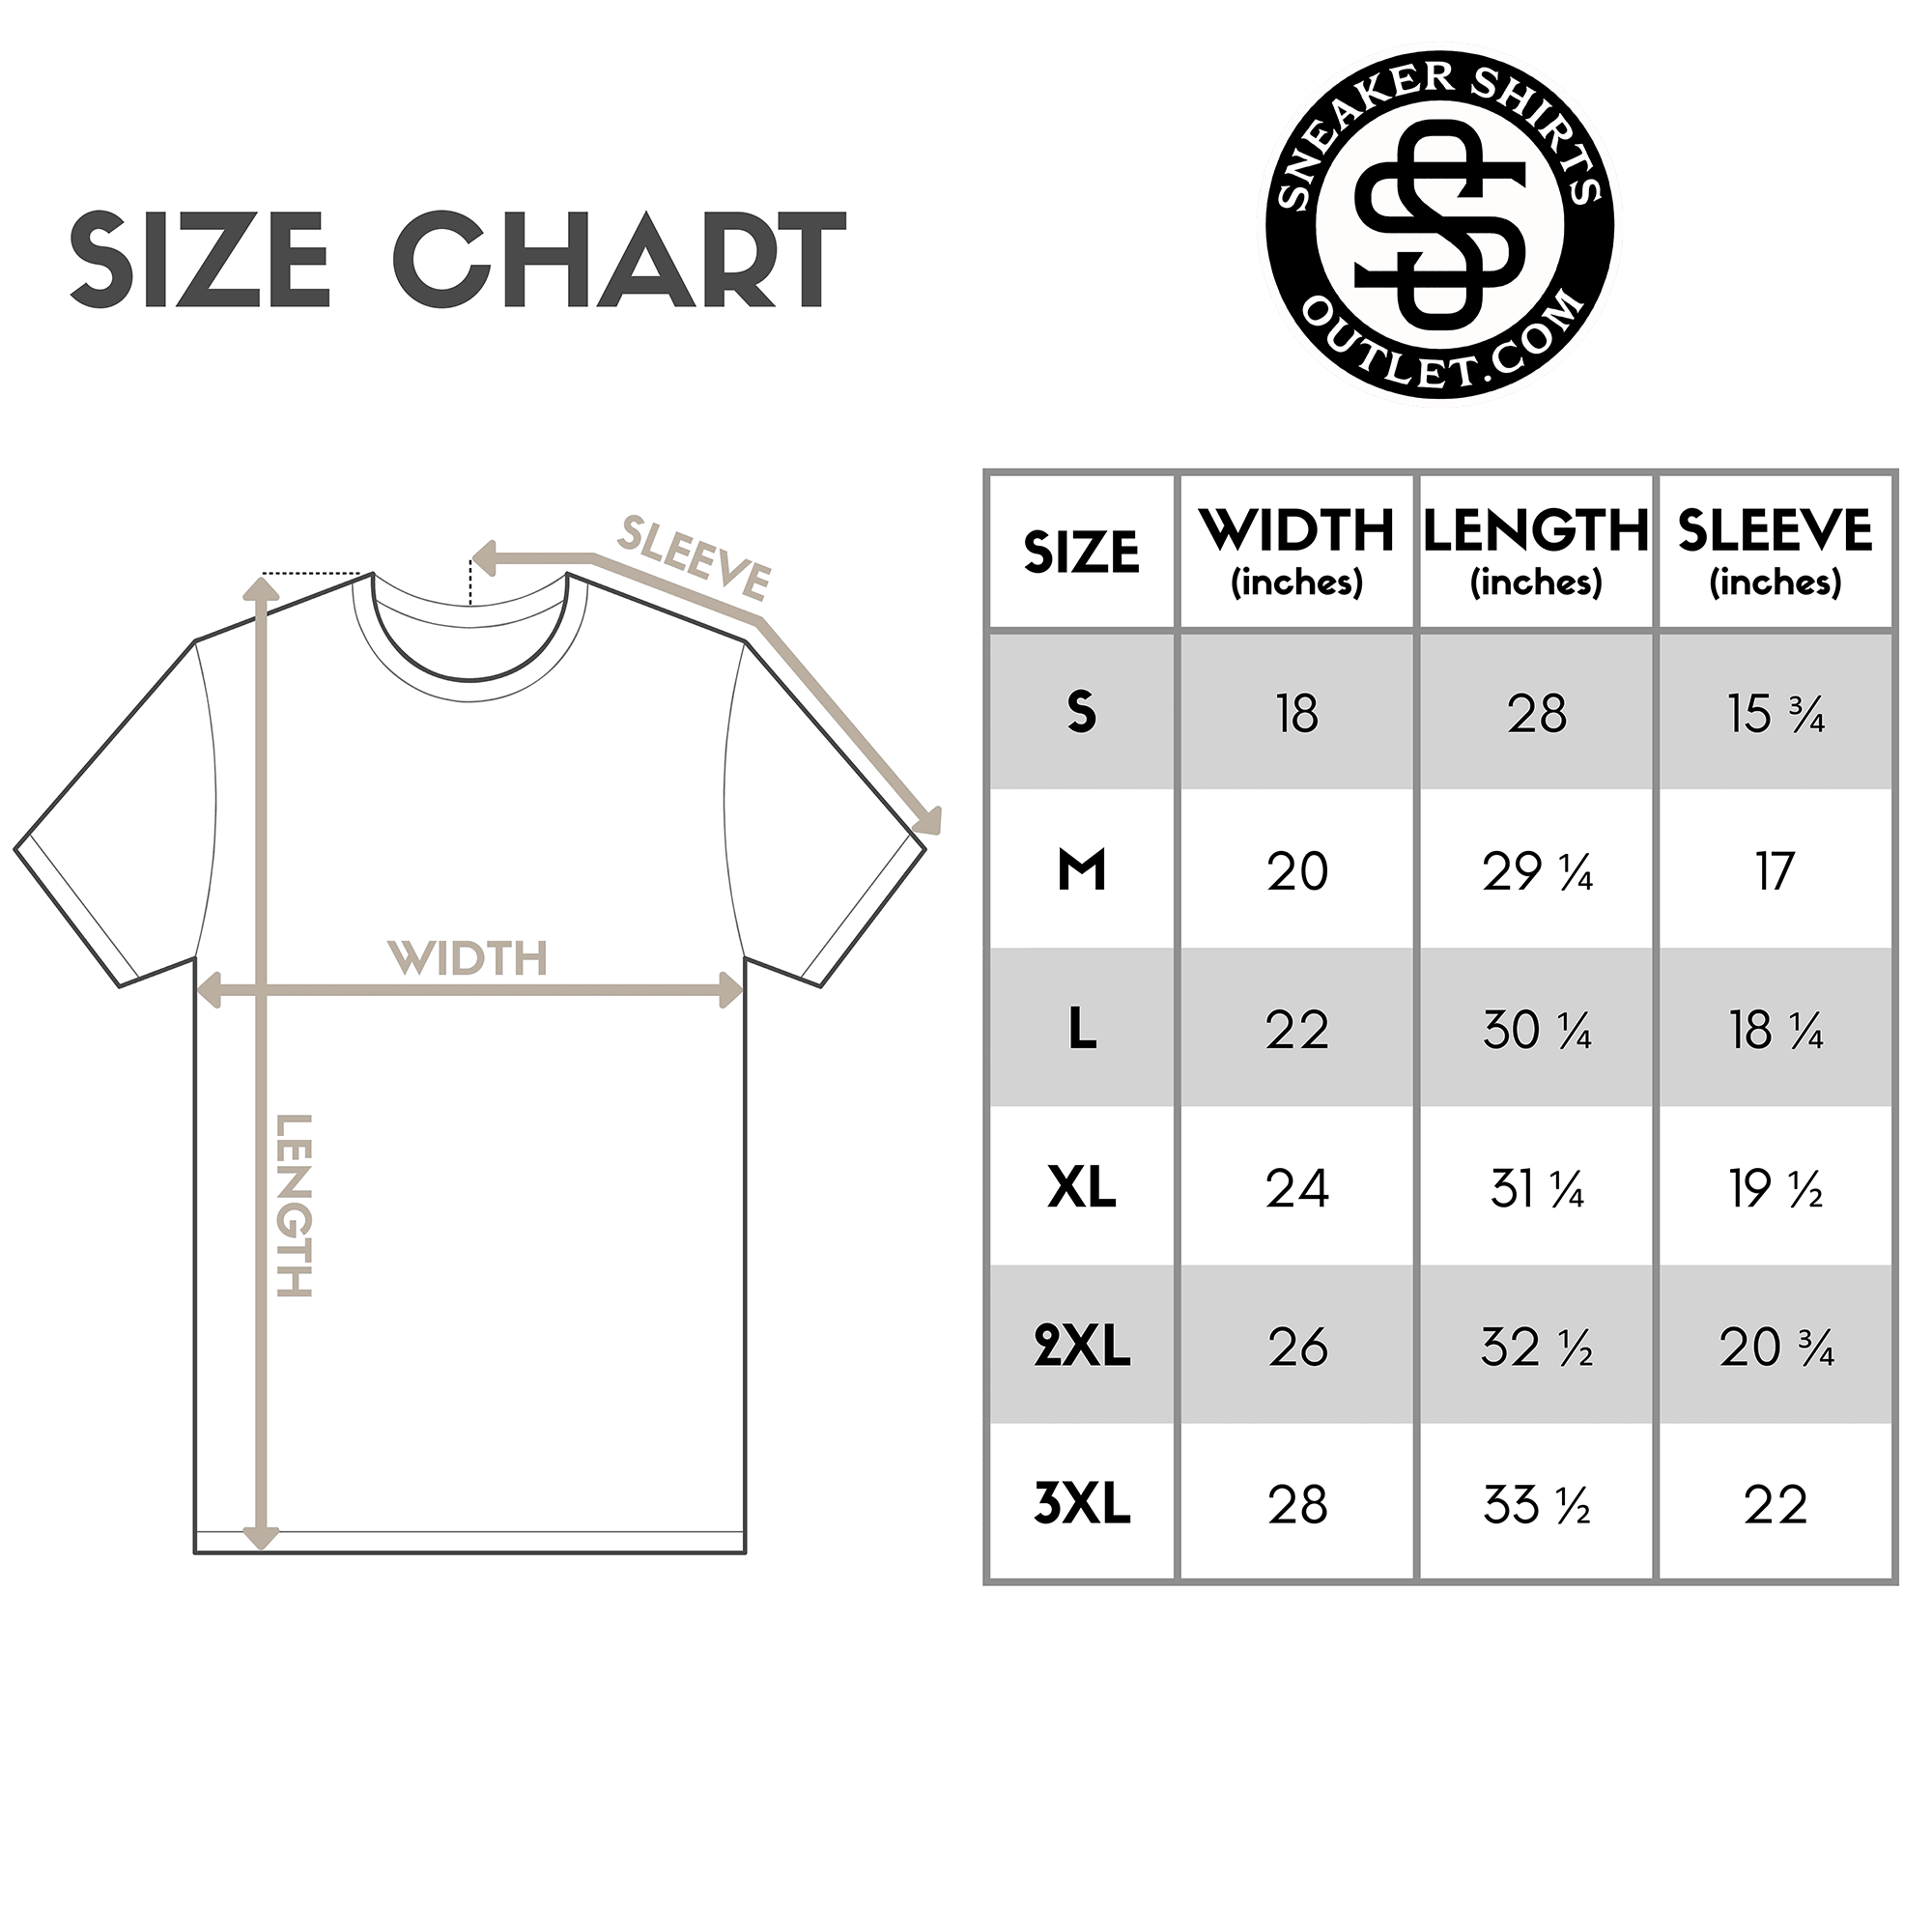 Medusa Shirt size chart photo